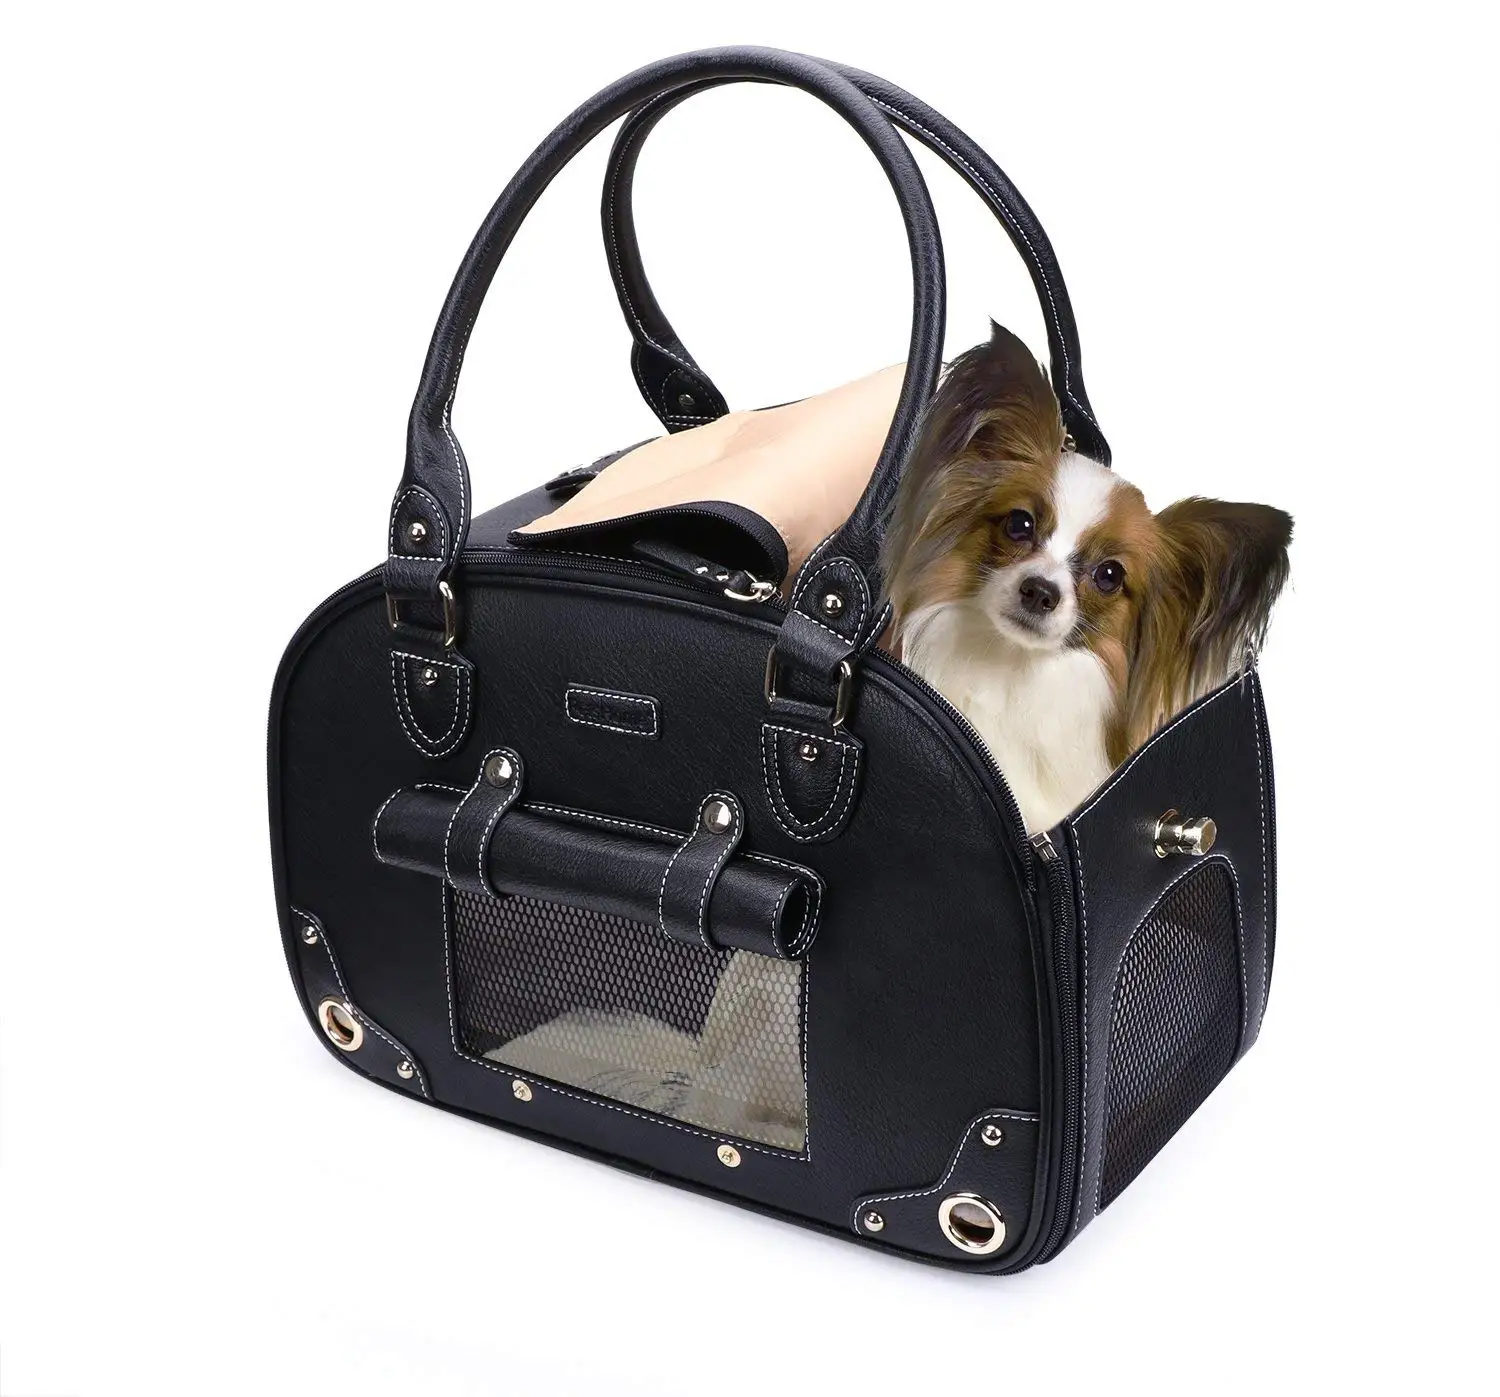 Переноска pet. Сумка-переноска для собак Louis Vuitton Softsided Luggage Dog Carrier 409876-Luxe. Переноска Sturdi. Переноска Pet Carrier размер 4. Переноска для собак Луи Виттон.